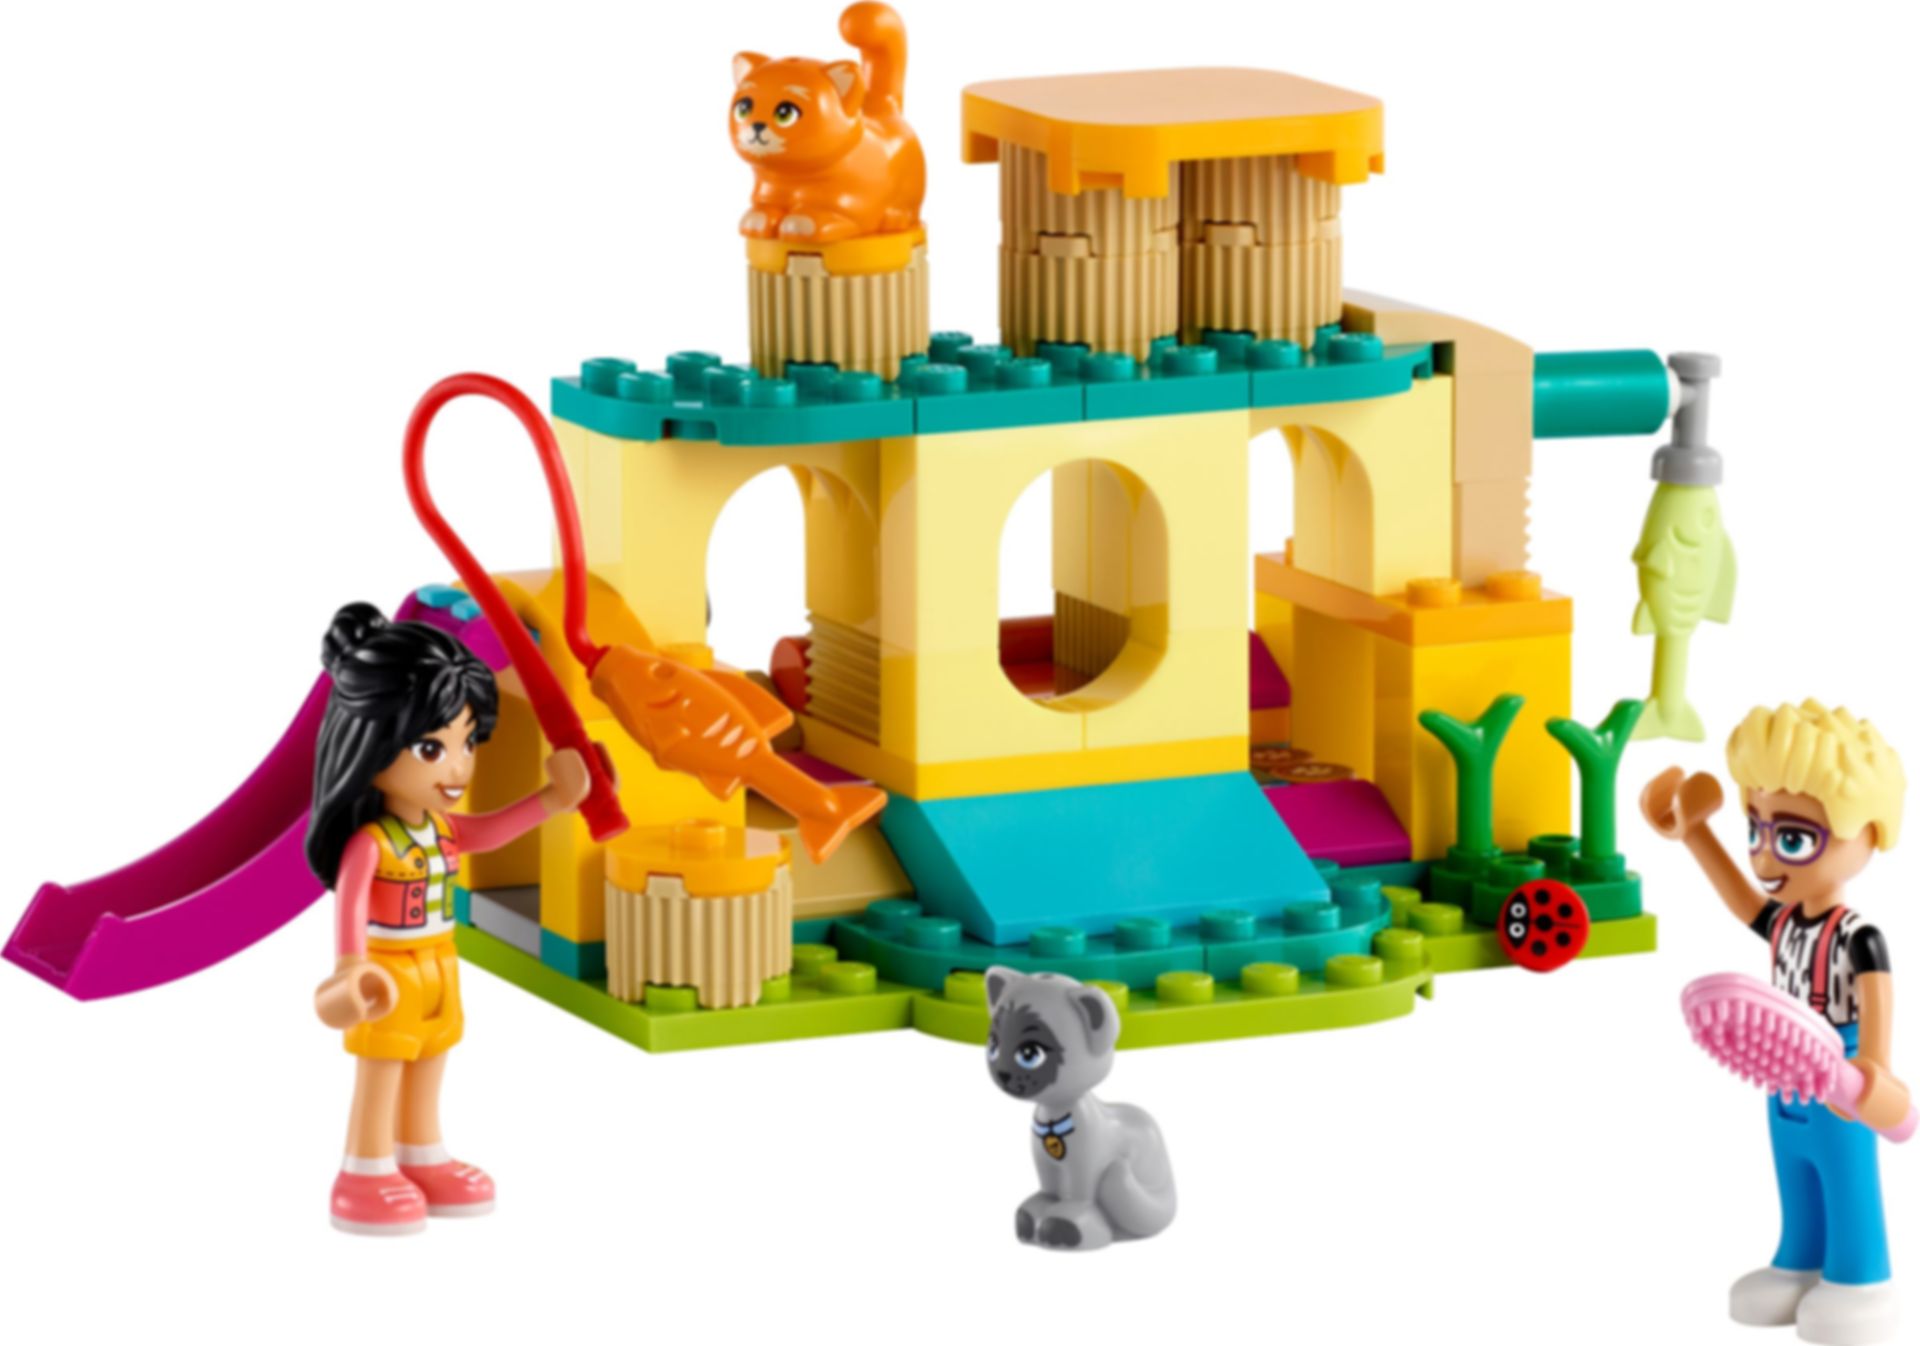 LEGO® Friends Abenteuer auf dem Katzenspielplatz komponenten